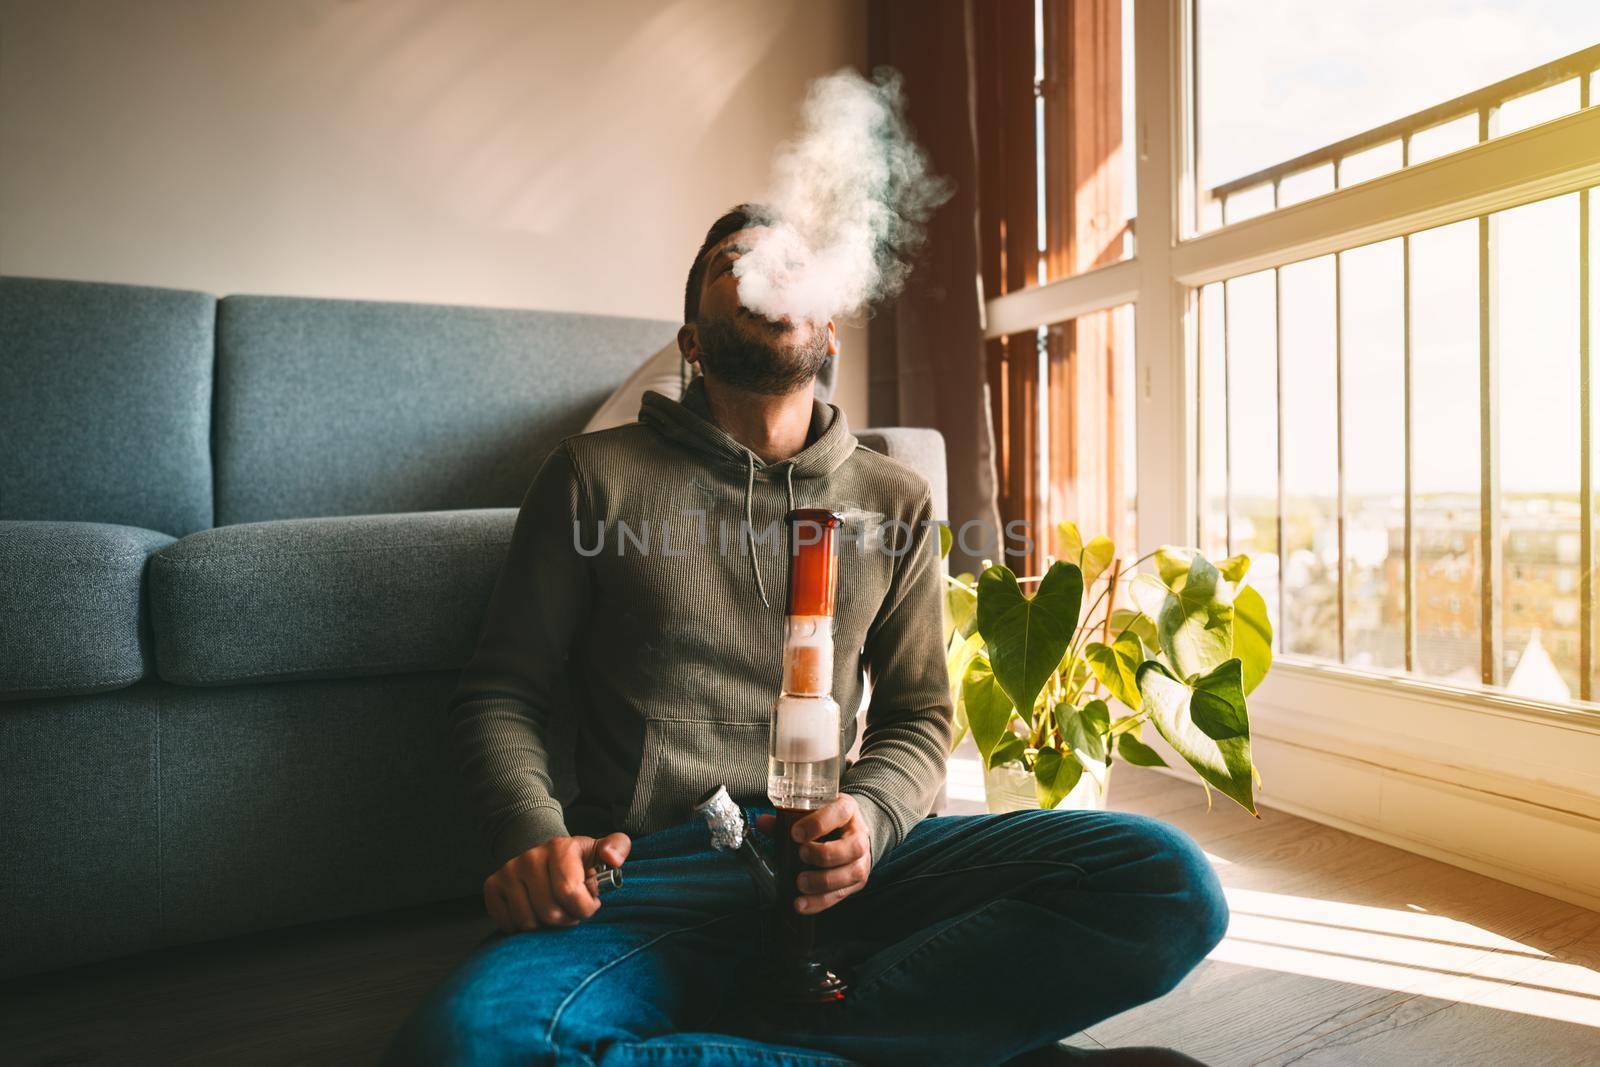 Man smoking bong and exhaling the smoke at home. Man smoking pot, medical marijuana or cannabis from a bong or water pipe. Cannabis and weed legalisation concept. High quality photo